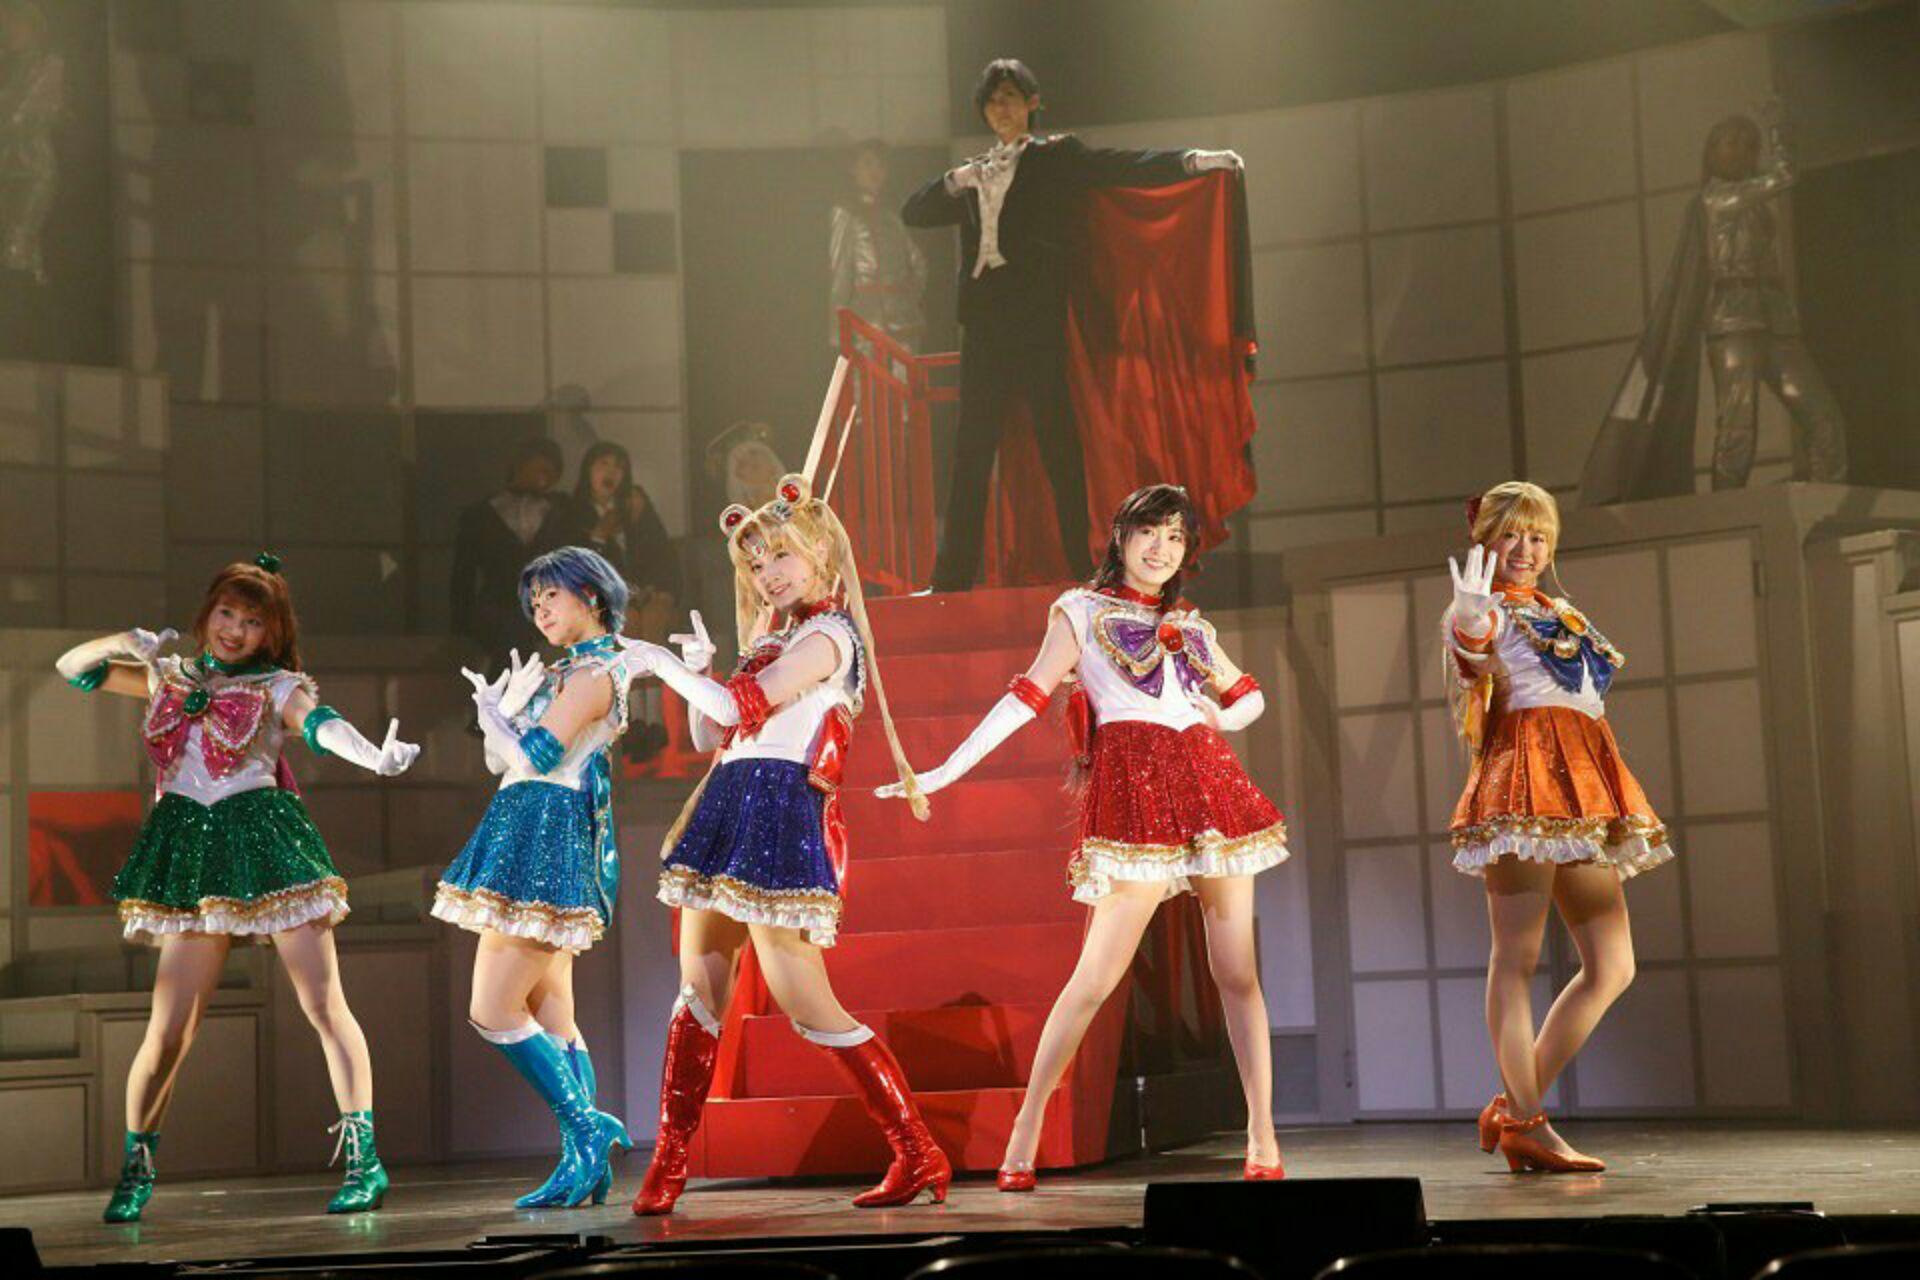 Mizuki Yamashita Stars in Musical “Sailor Moon” : Nogizaka46, “Reincarnation” to the future